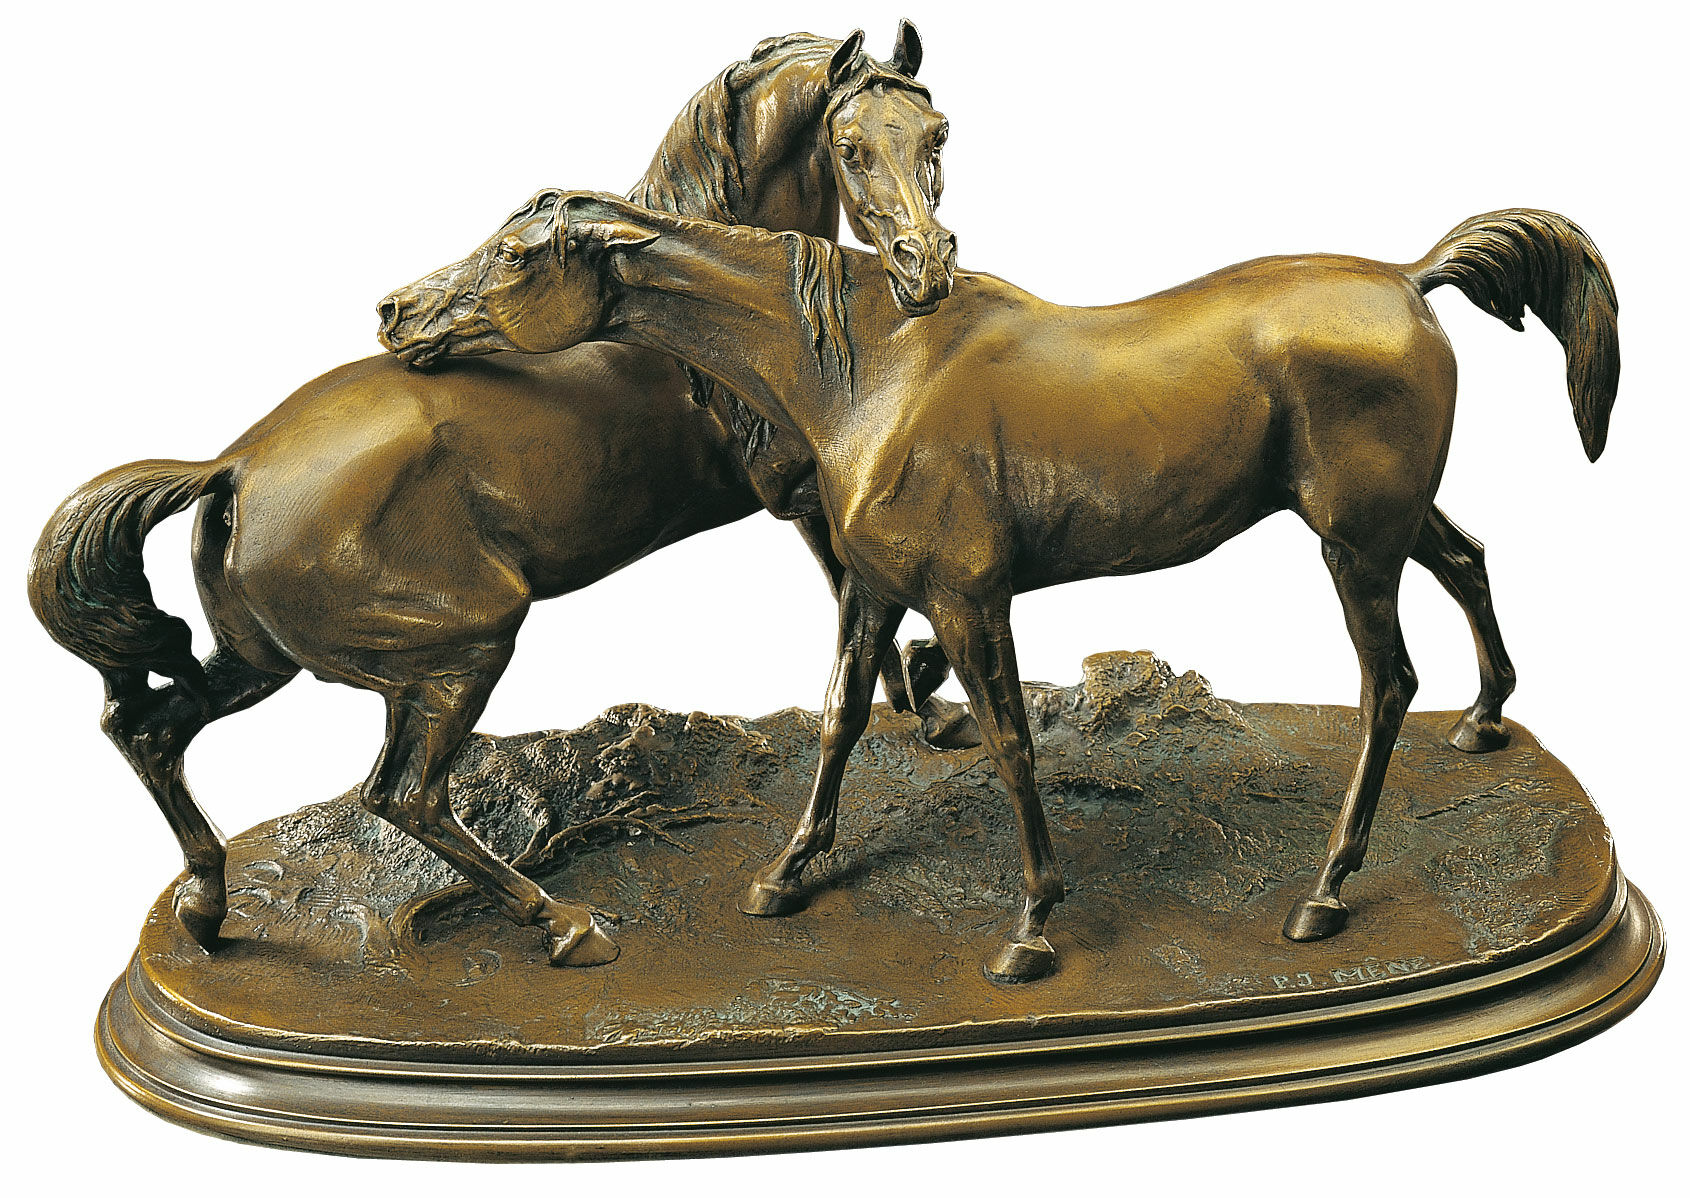 Horse sculpture "The Embrace", bonded bronze by Pierre Jules Mêne